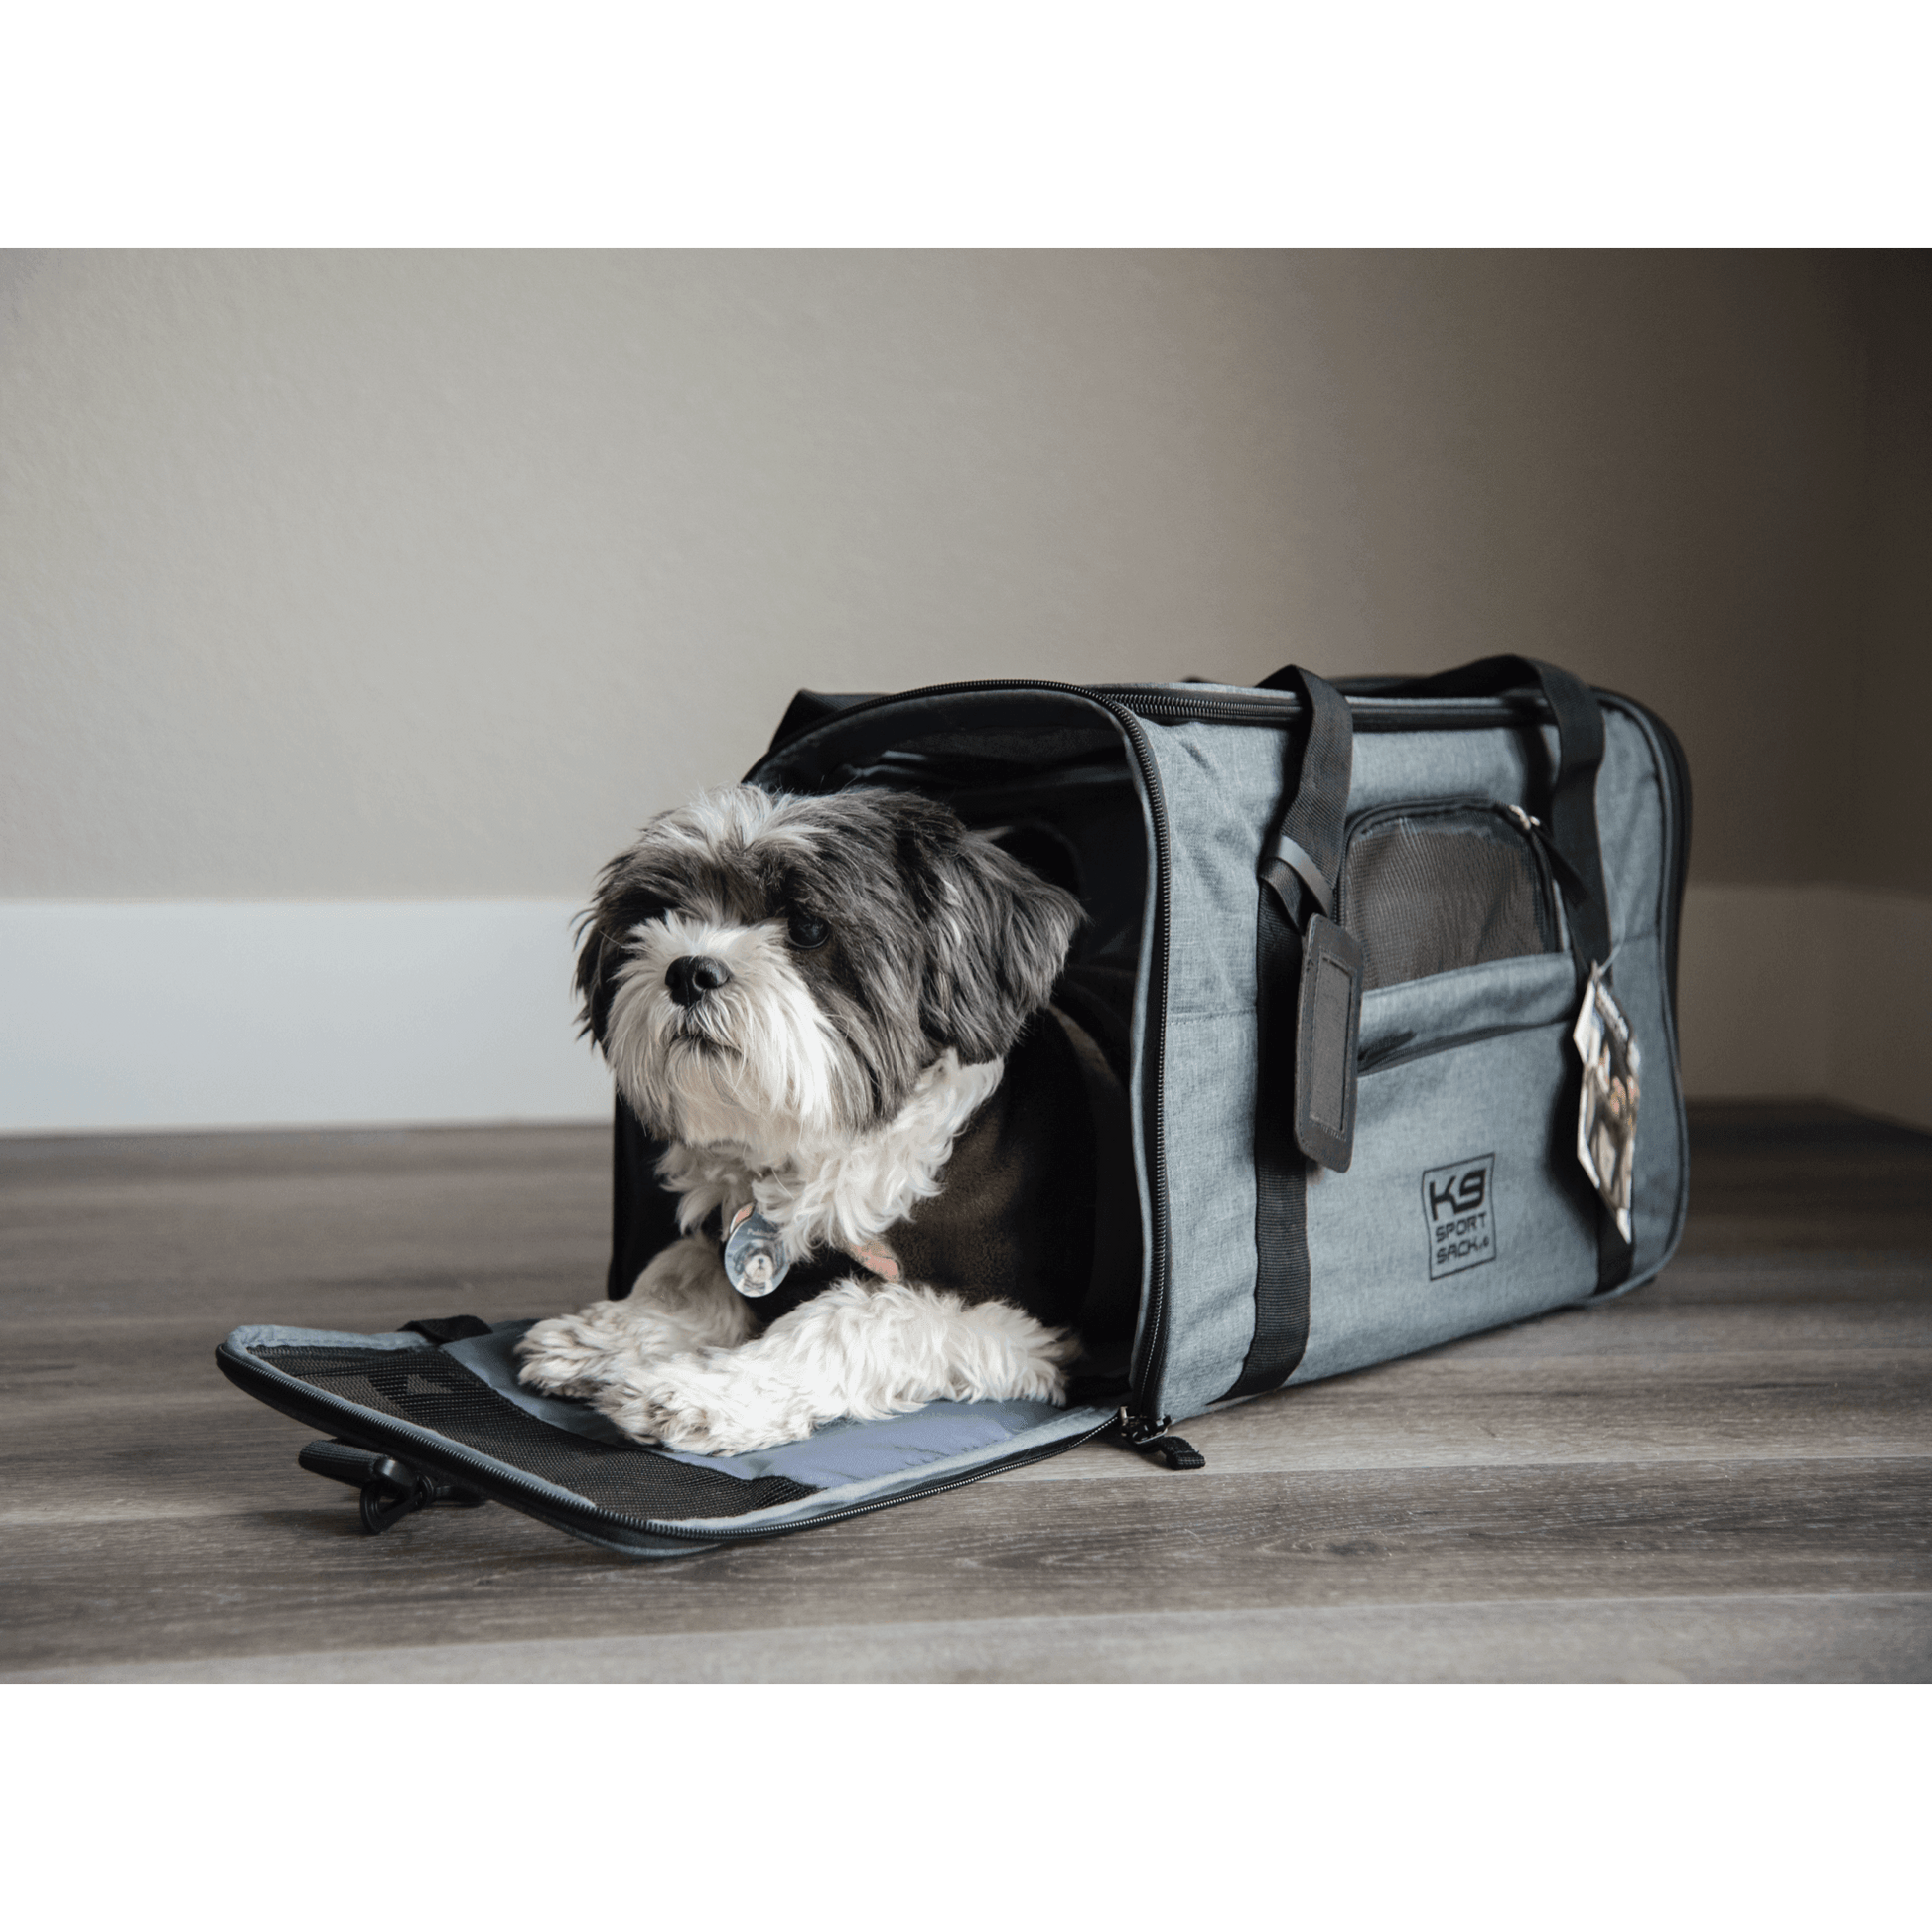 Small dog inside dog carrier